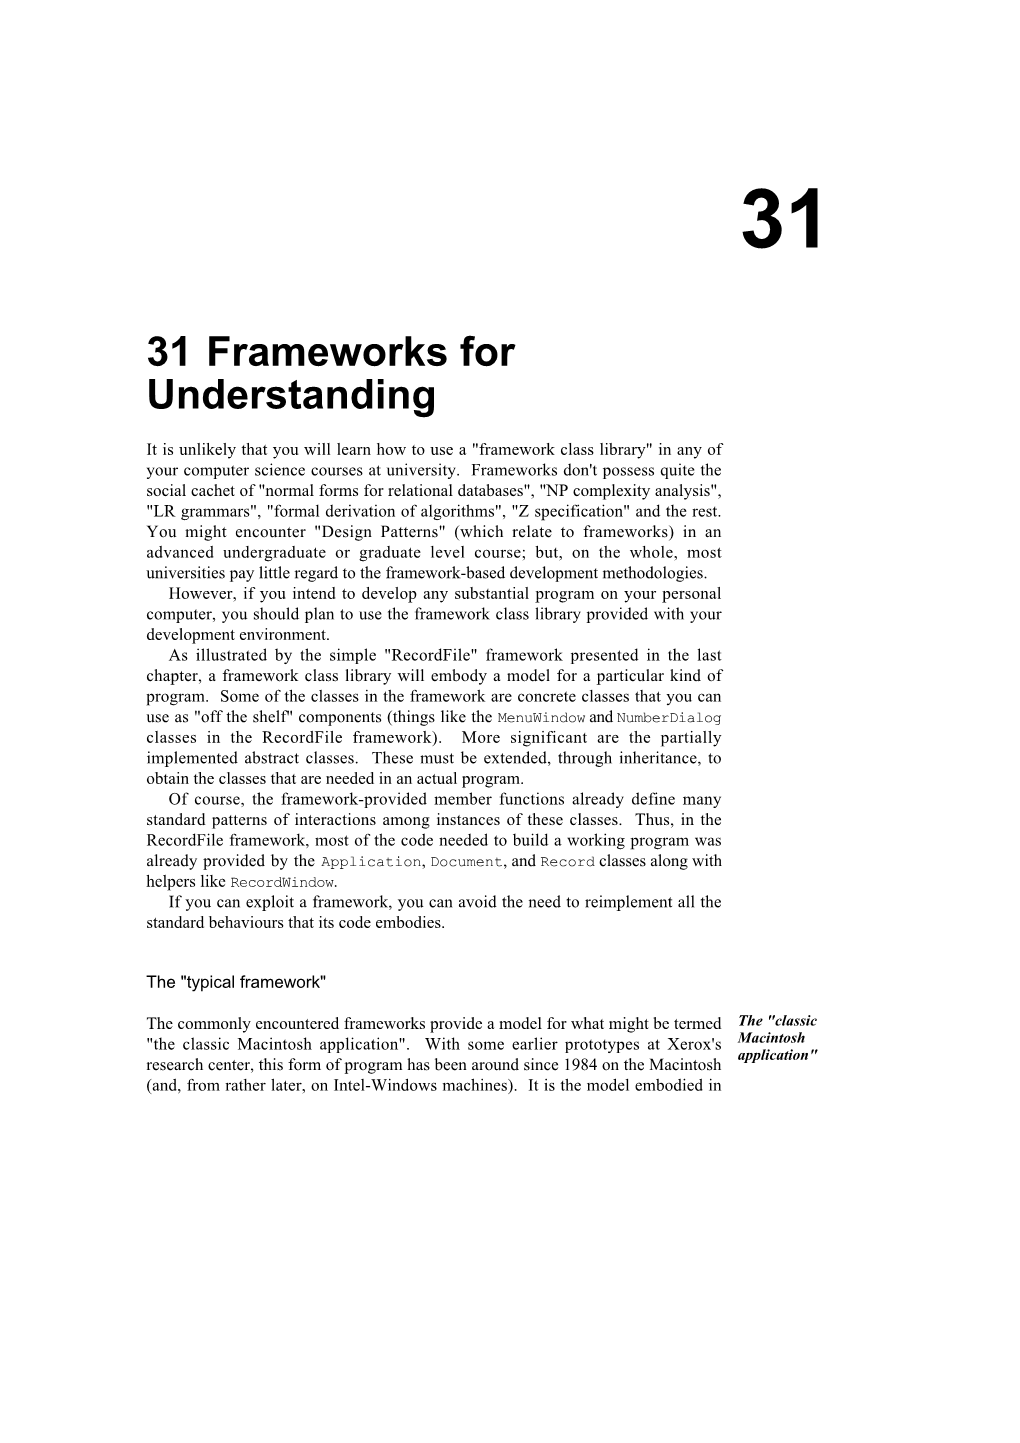 31 Frameworks for Understanding